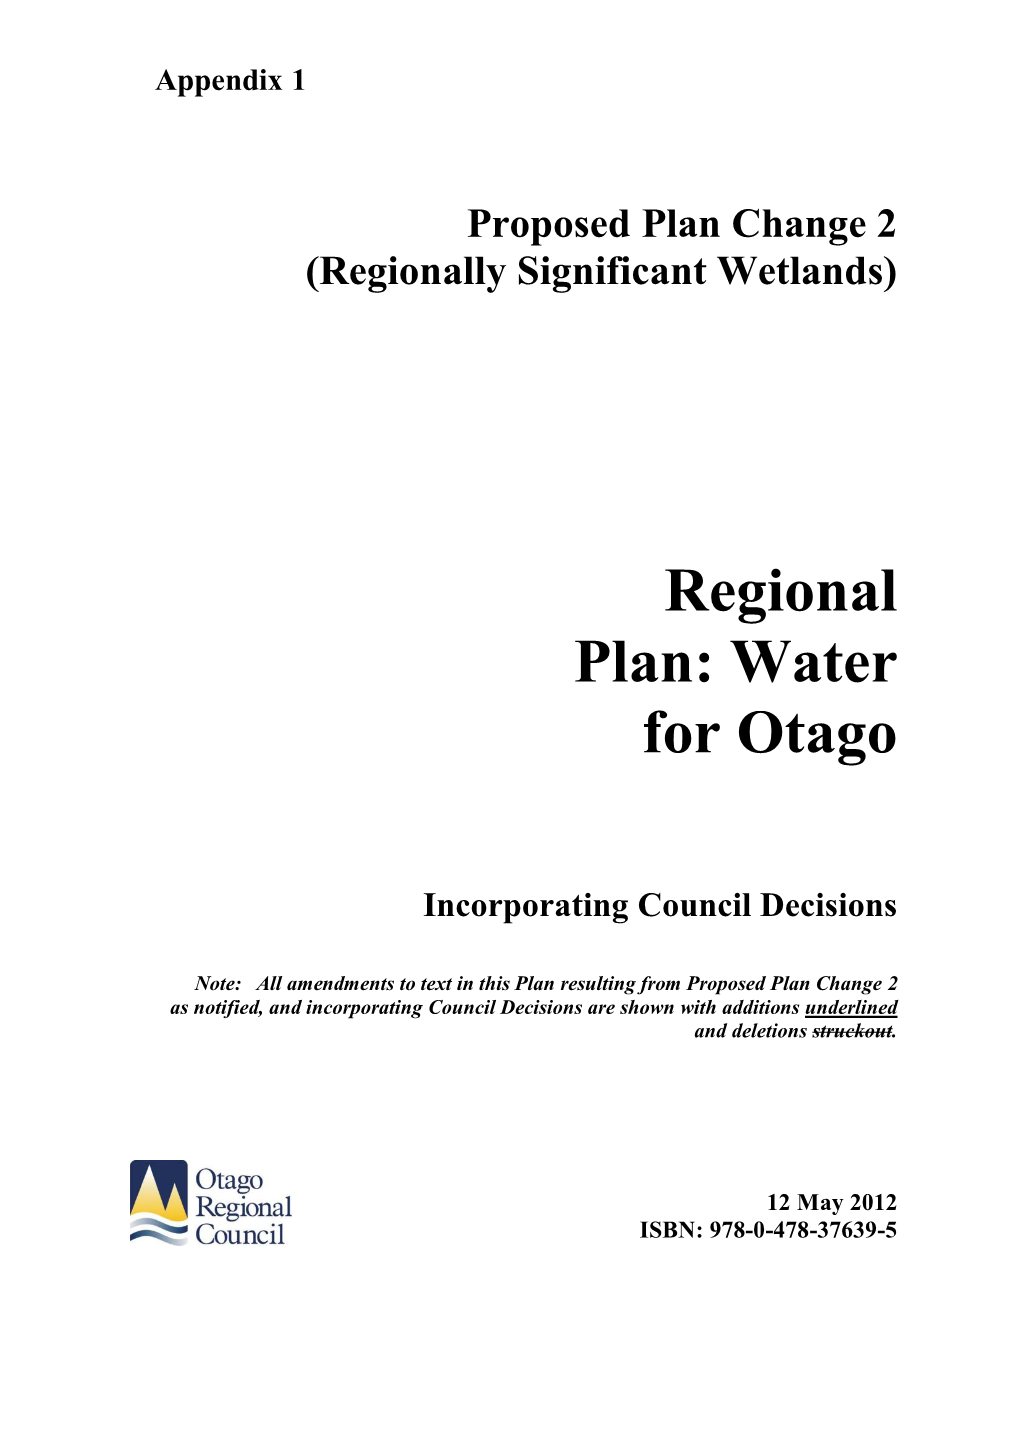 (Regionally Significant Wetlands) Regional Plan: Water for Otago